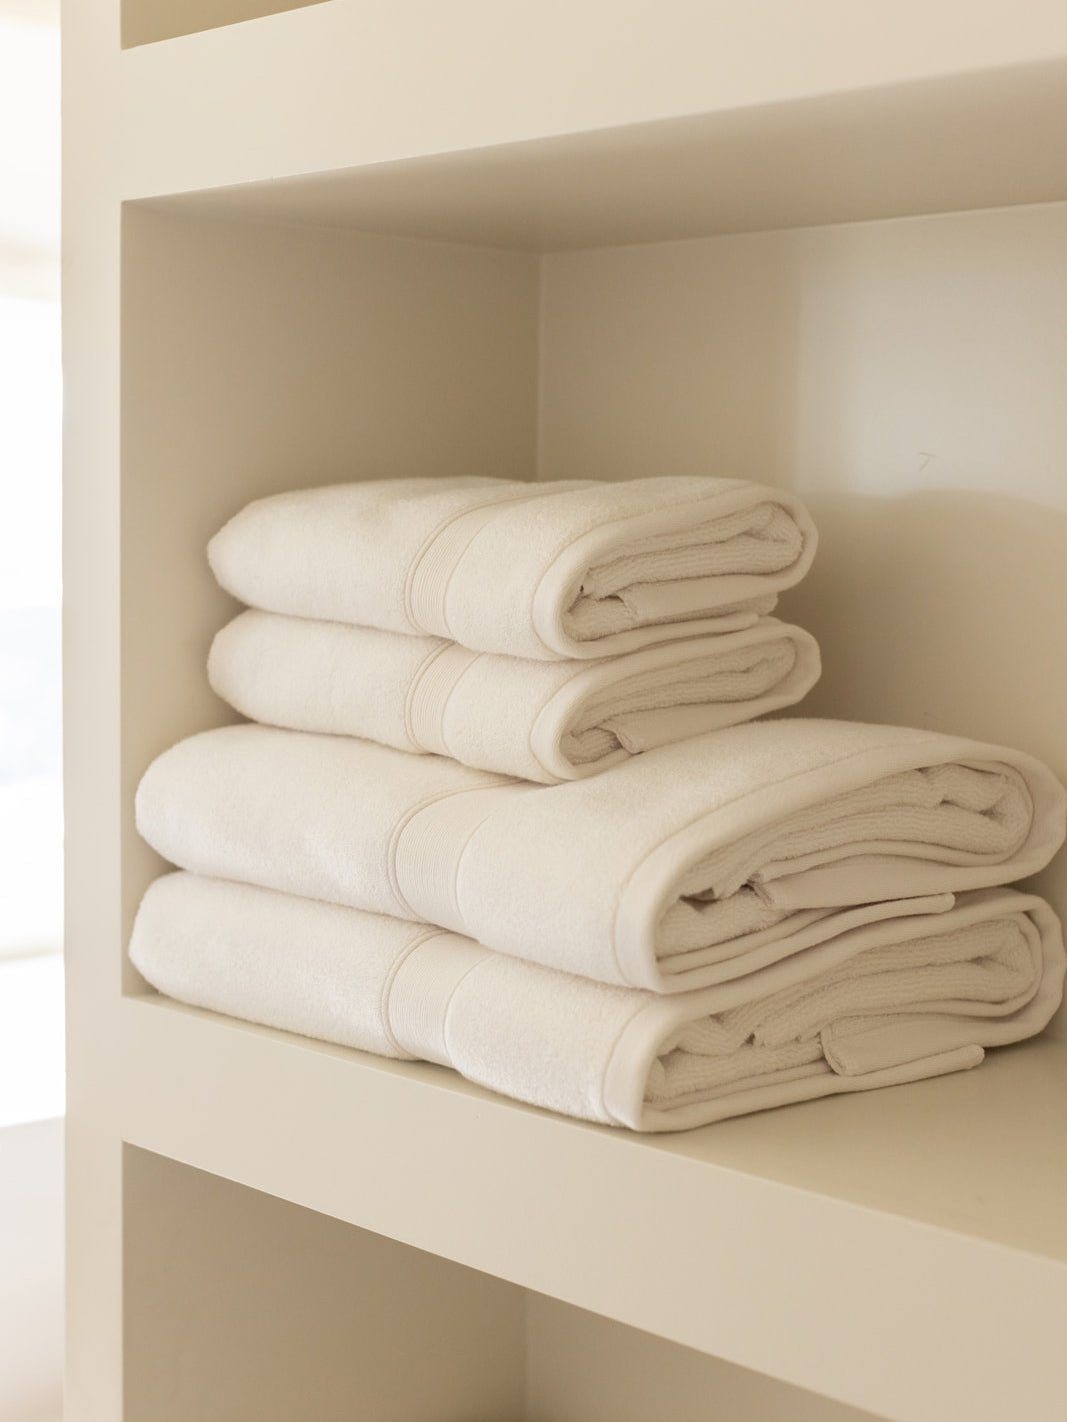 Seashell towels folded on shelf 